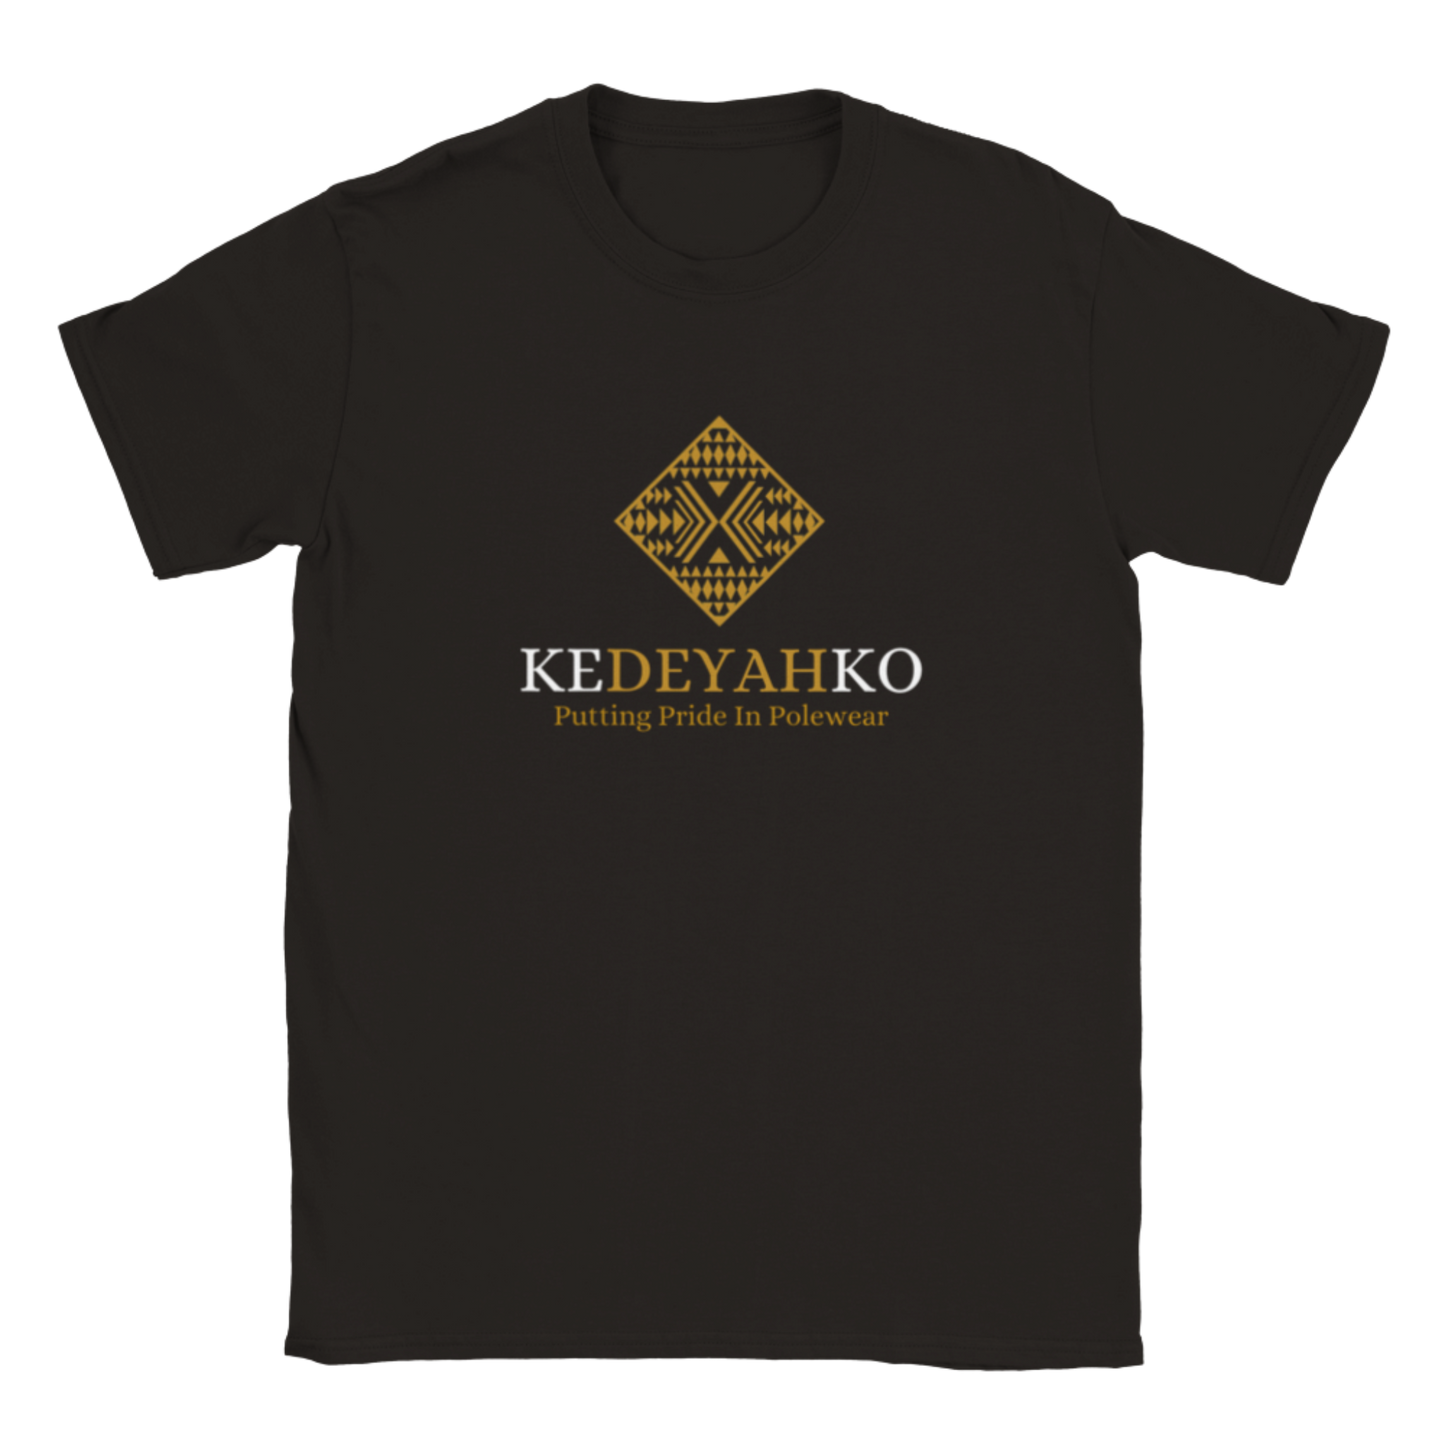 Kedeyahko Original T-shirt